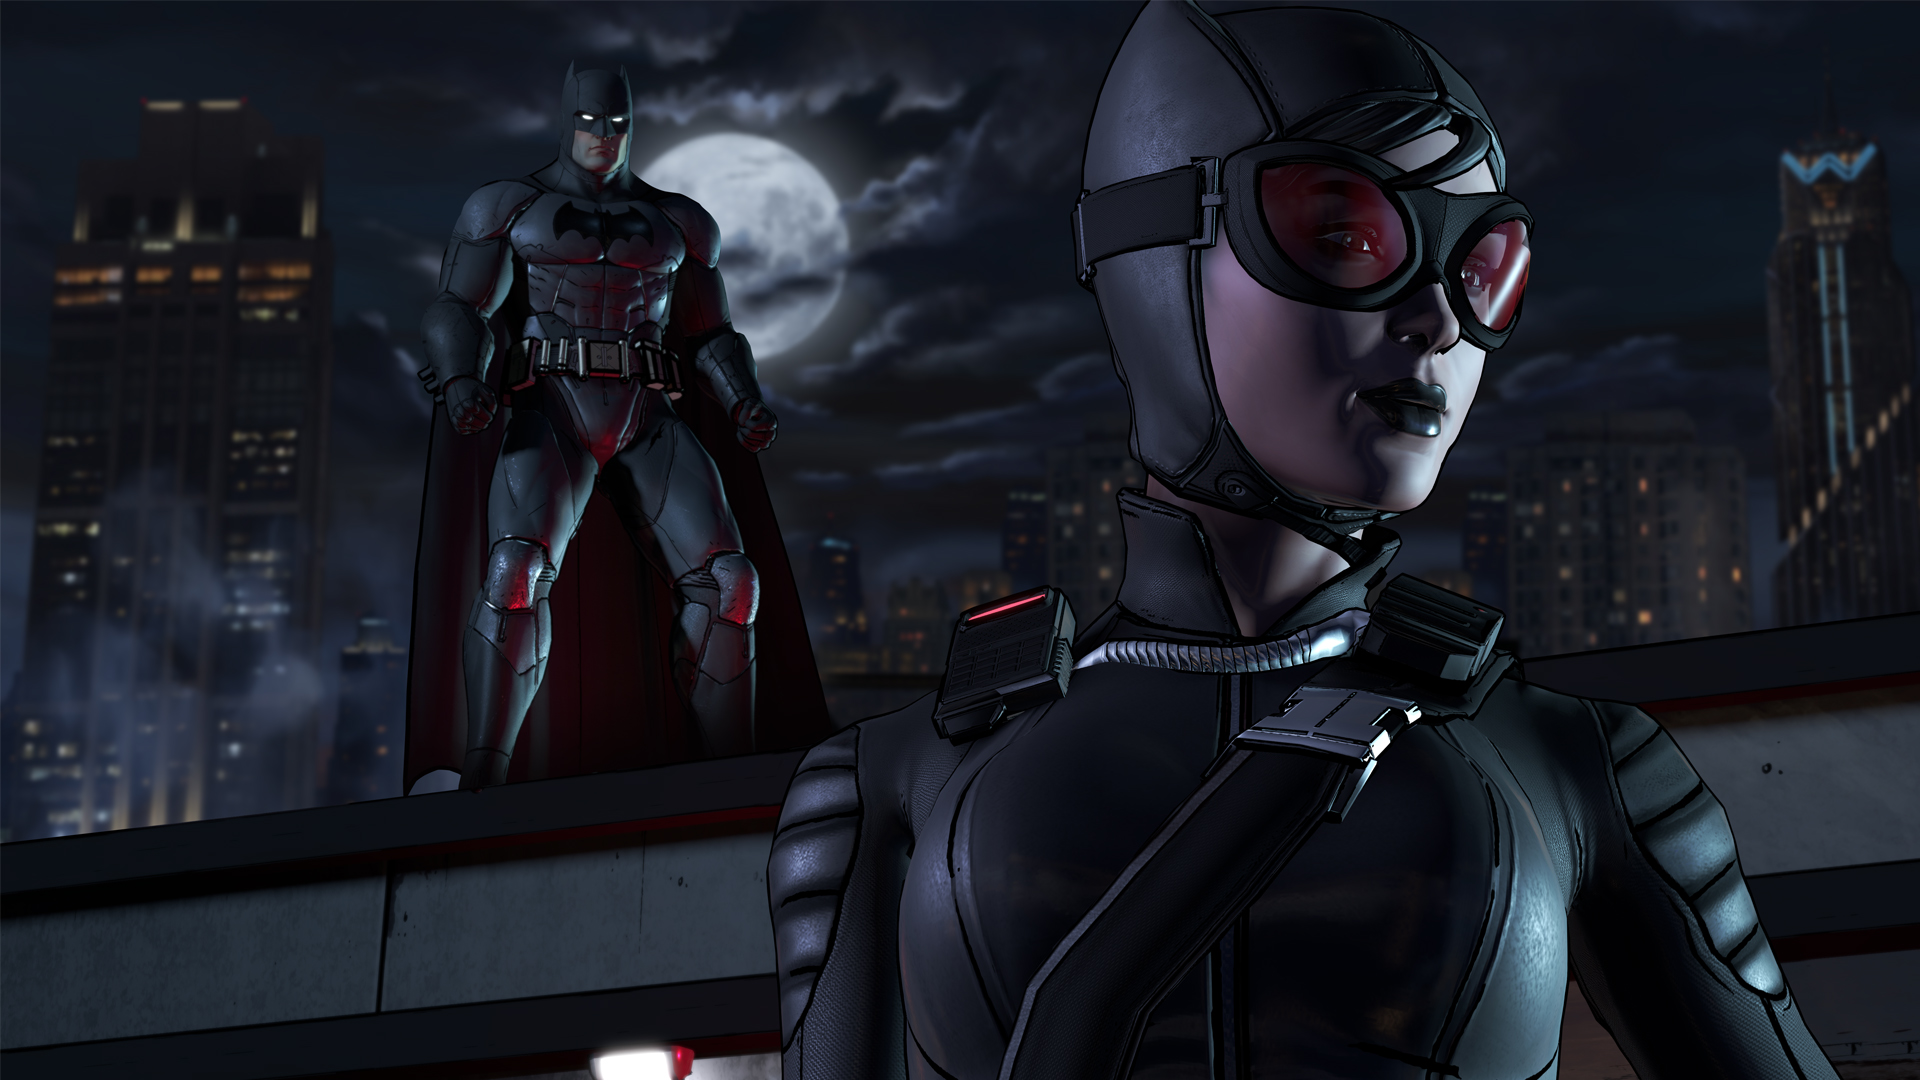 Batman: The Telltale Series HD Wallpaper